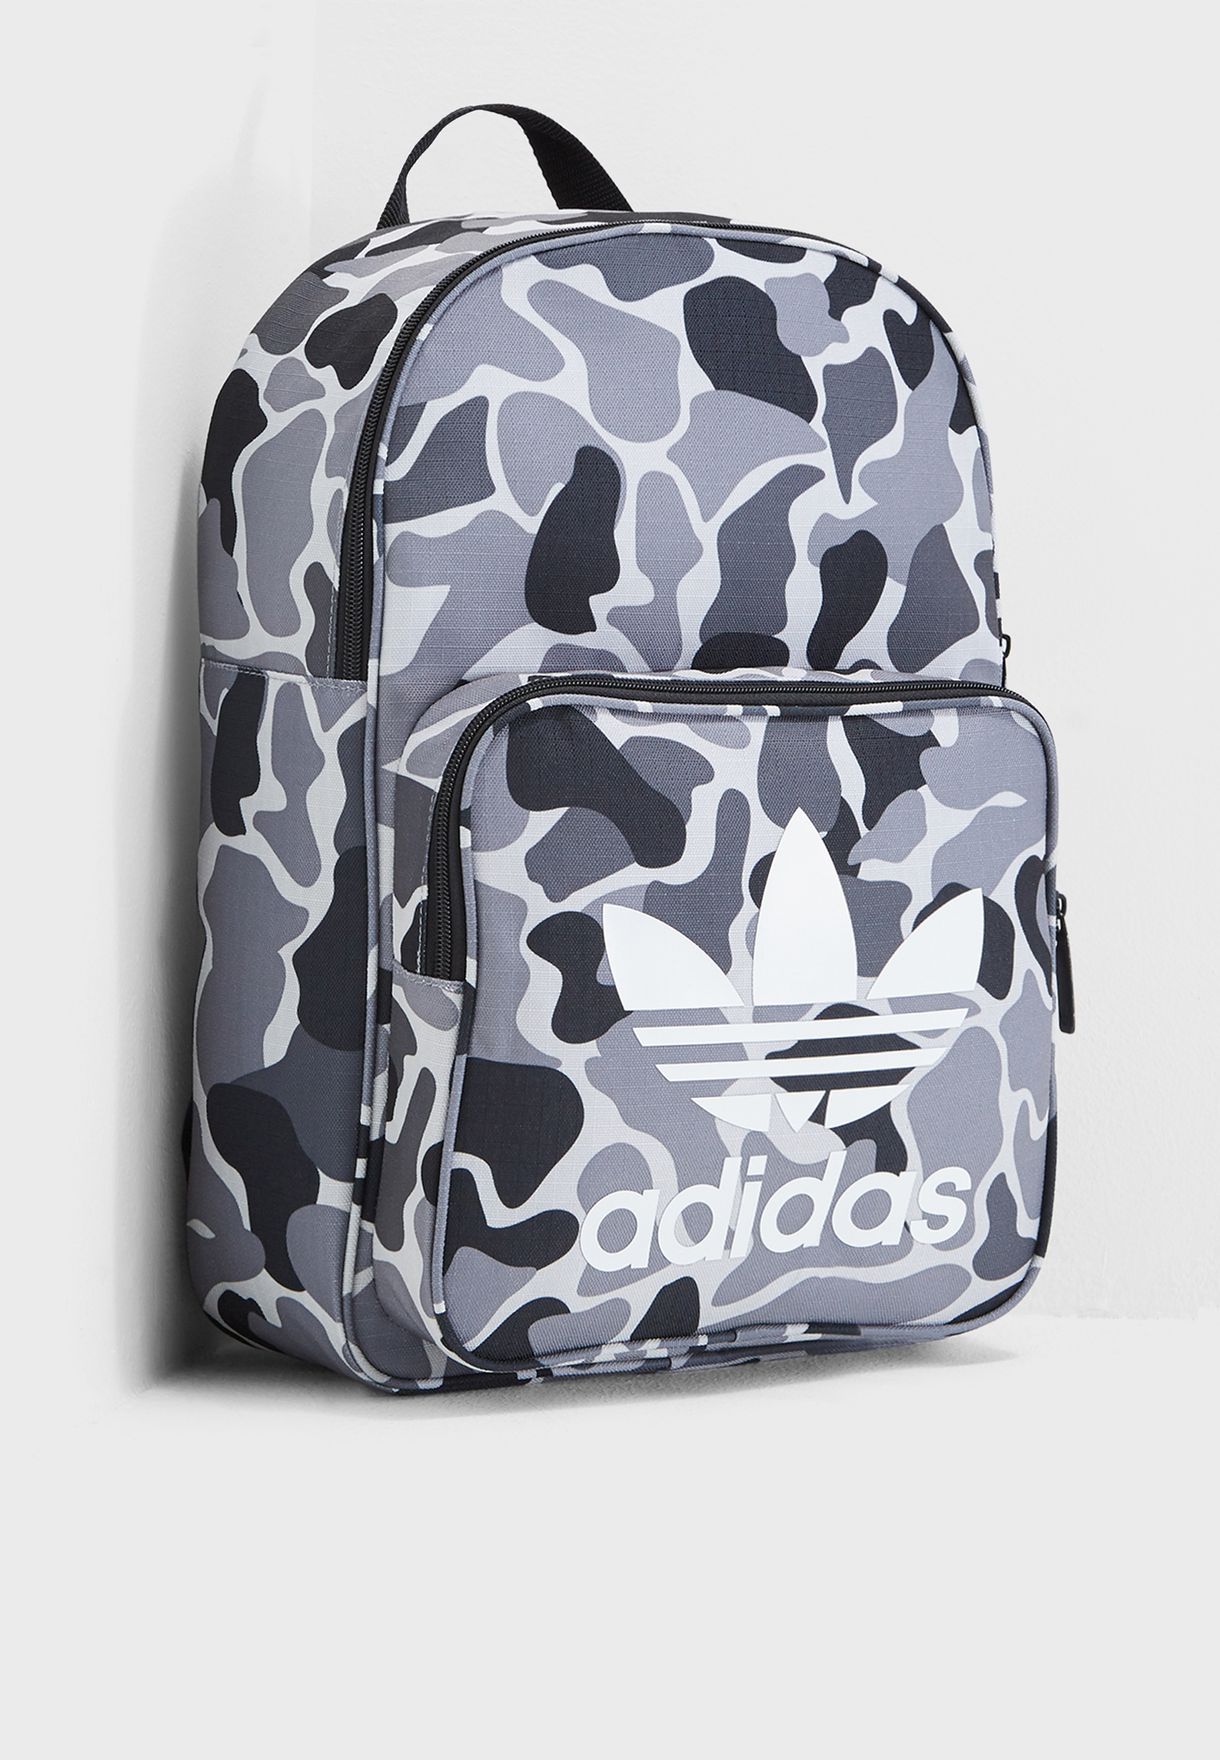 adidas classic camo backpack